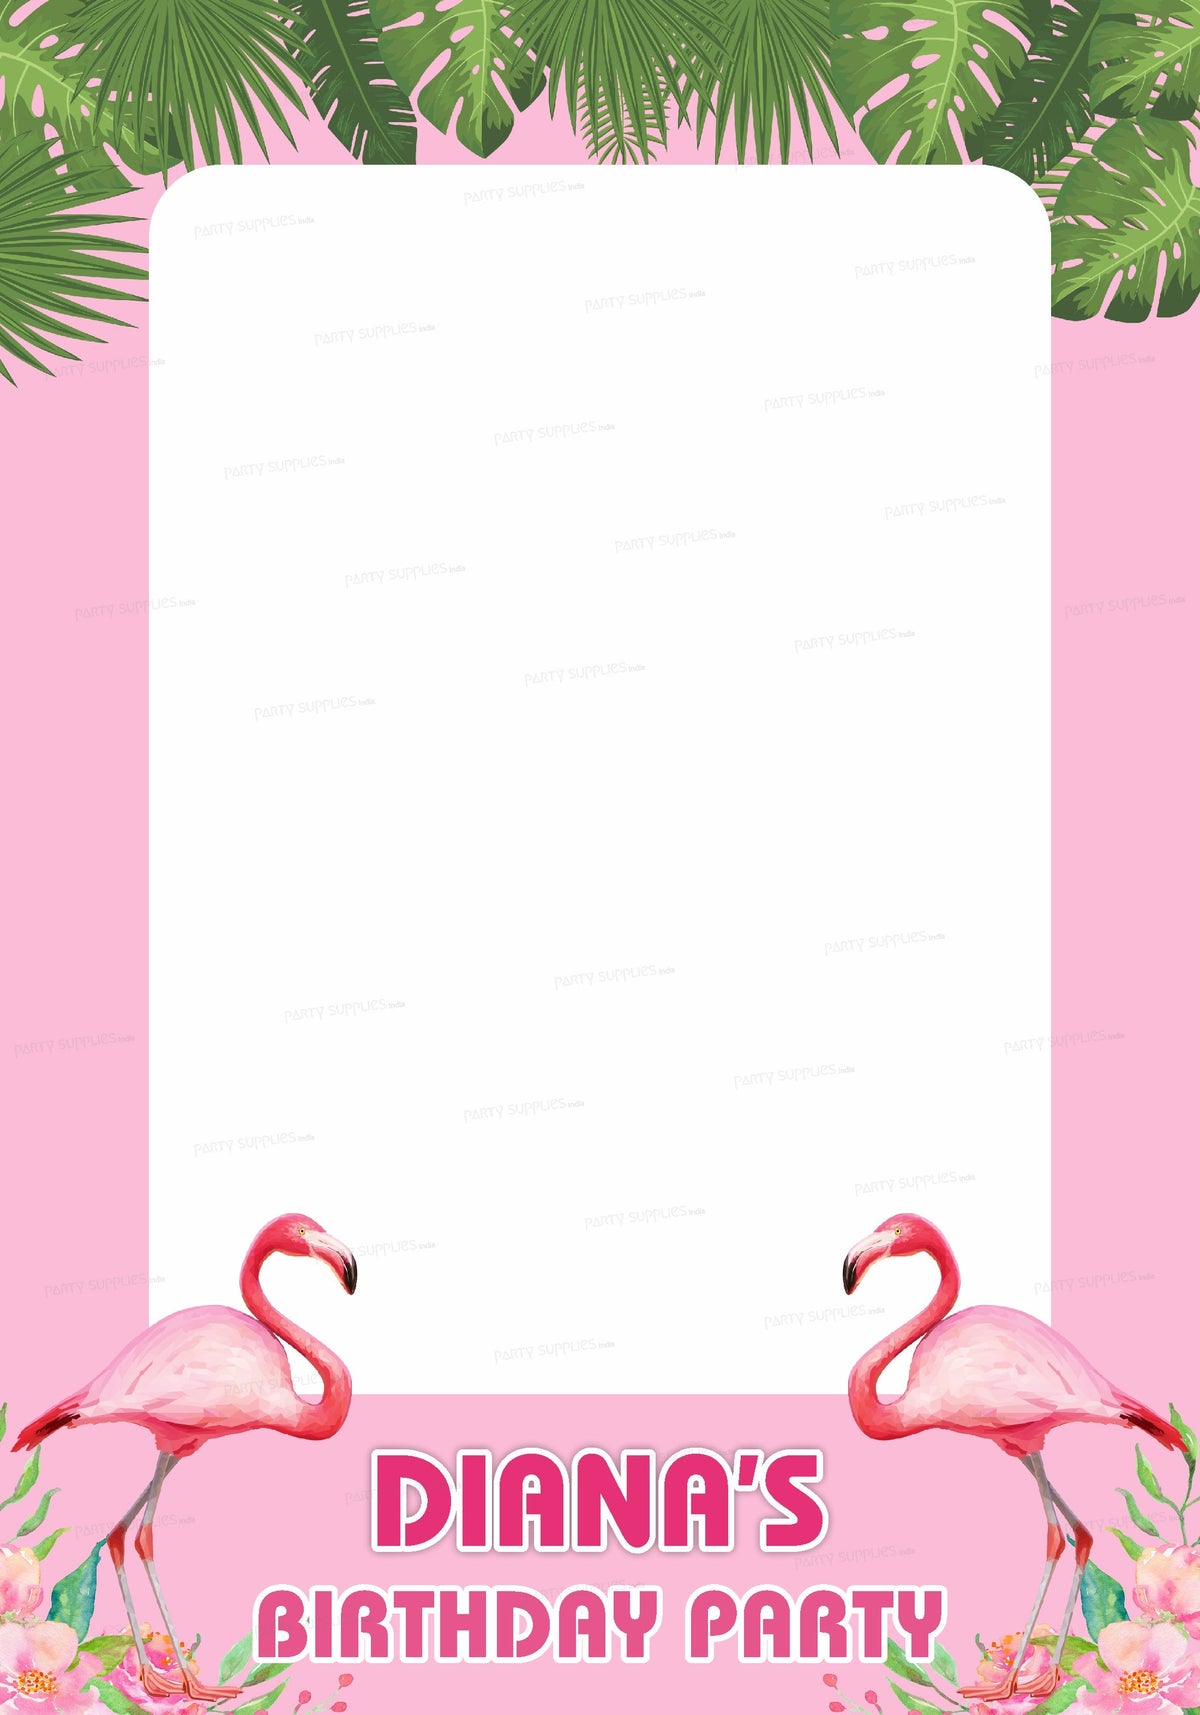 PSI Flamingo Theme Customized PhotoBooth